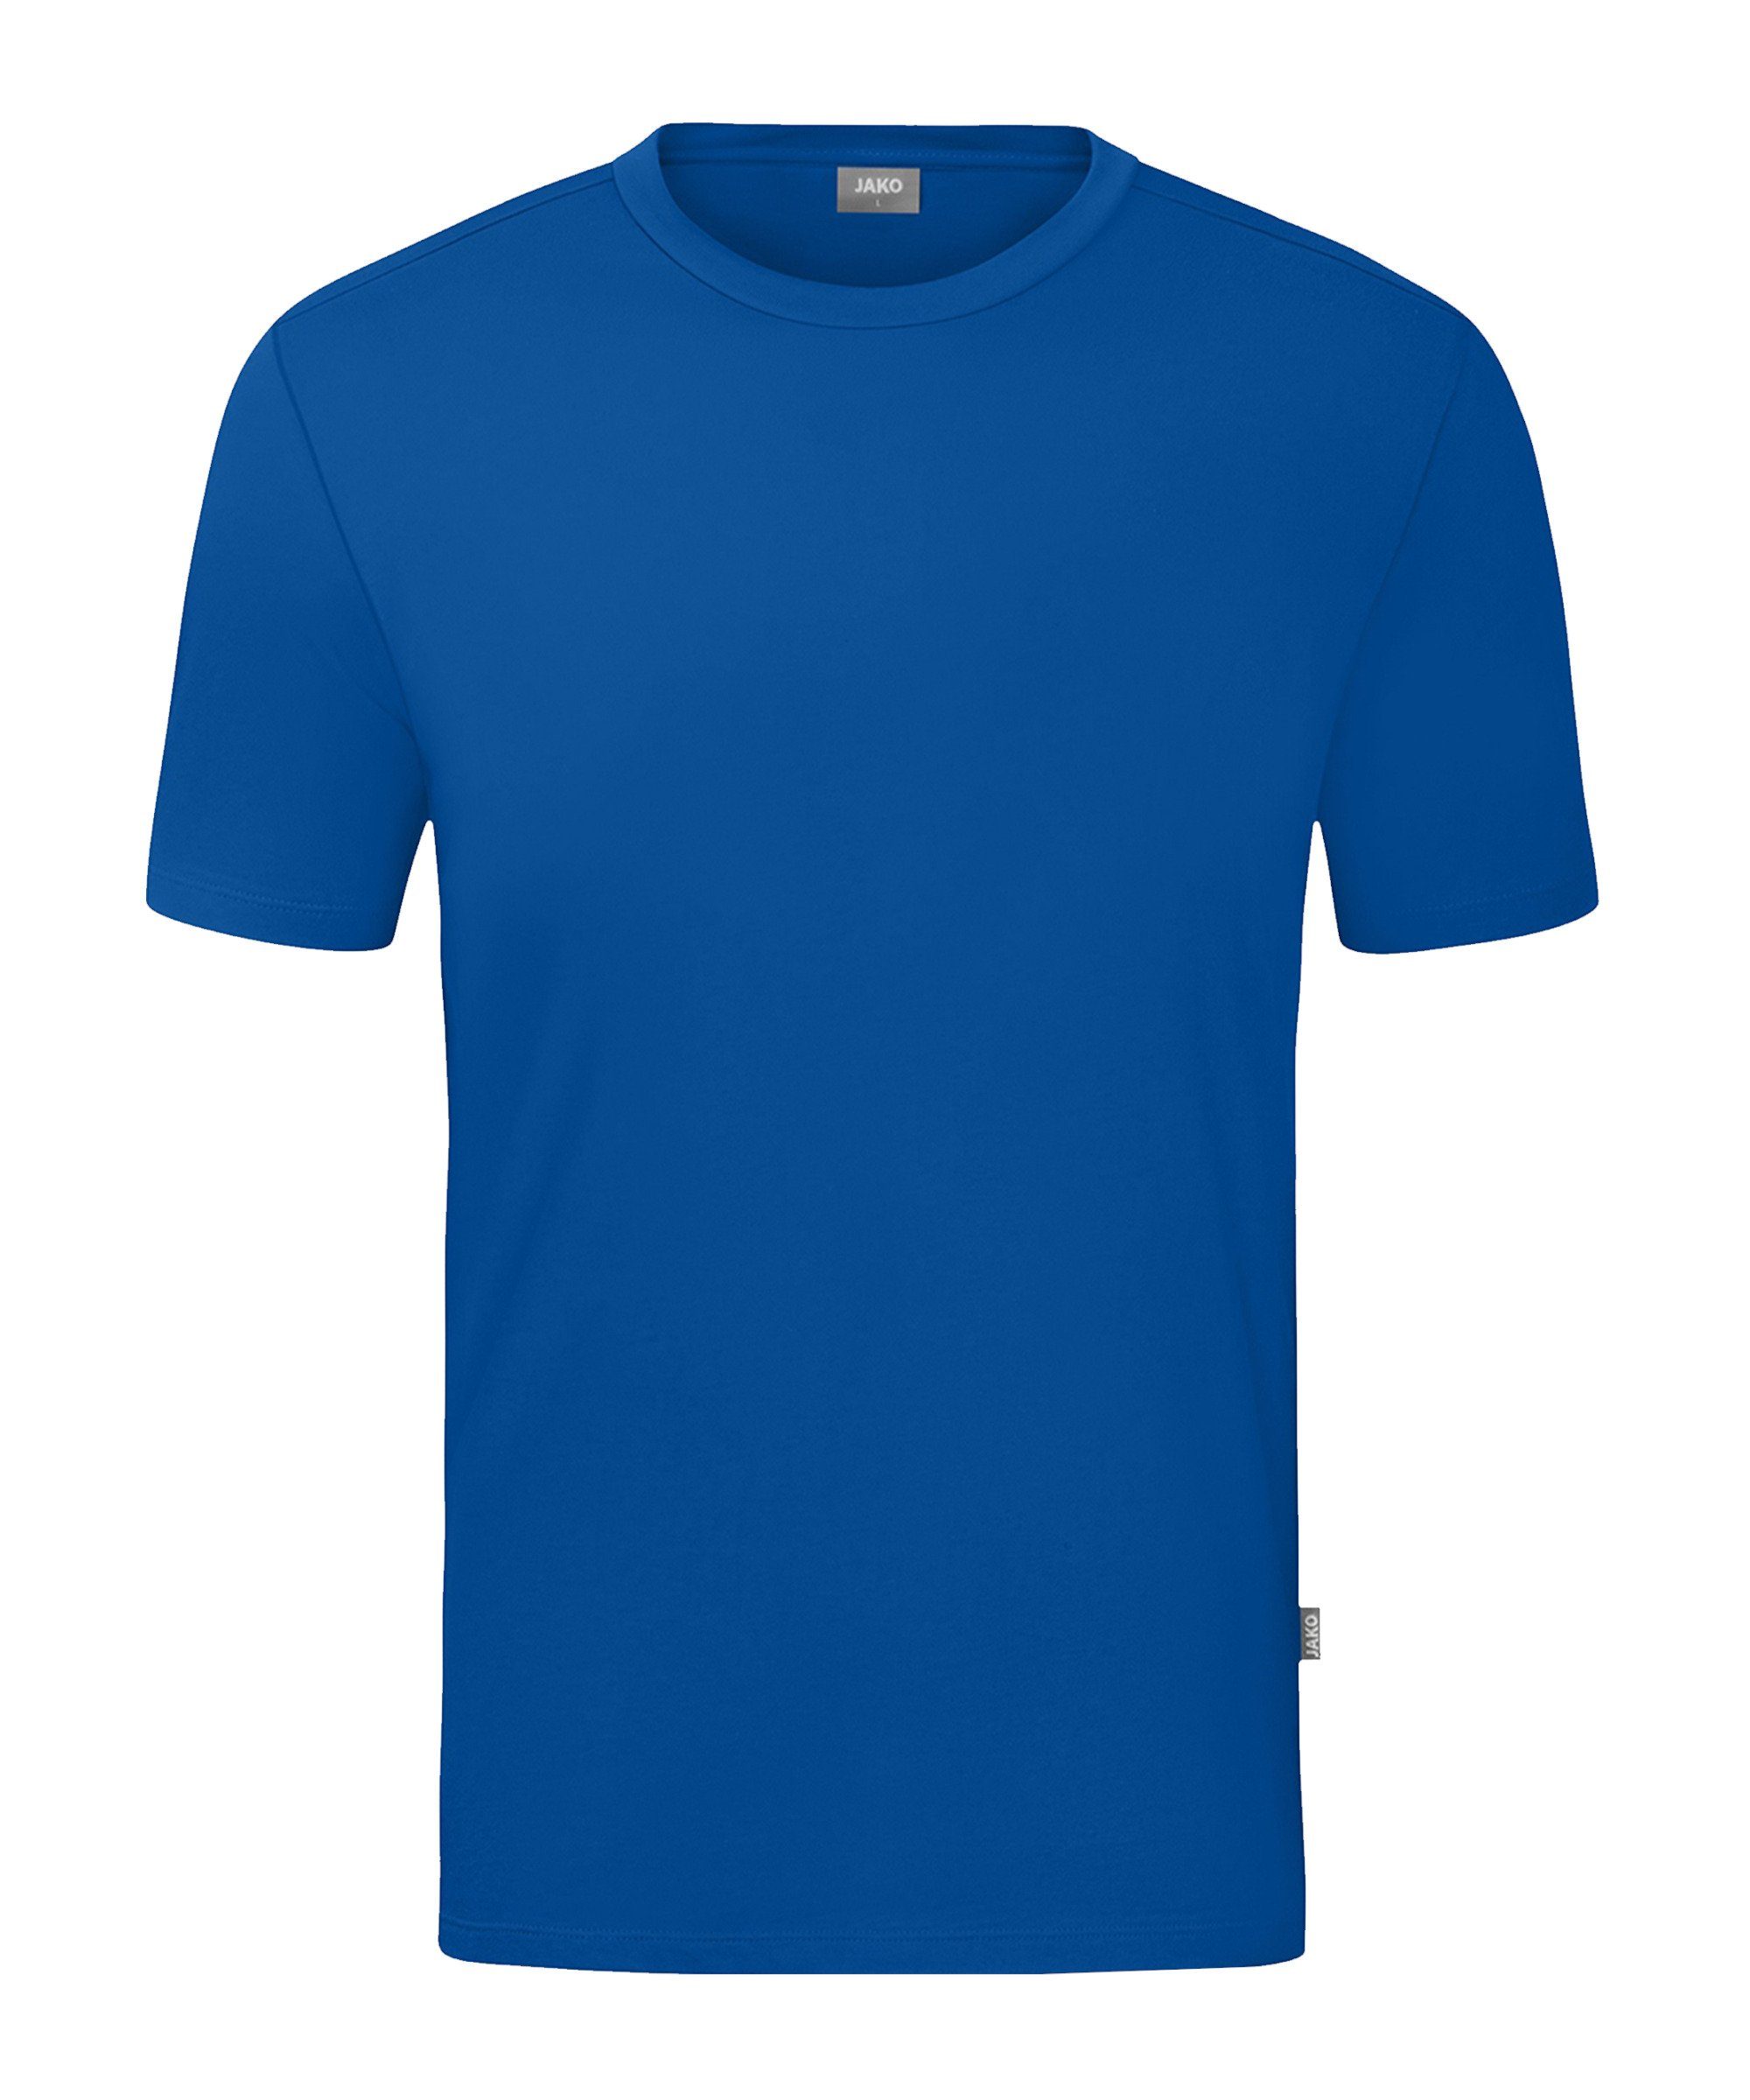 Jako blau T-Shirt Organic T-Shirt default